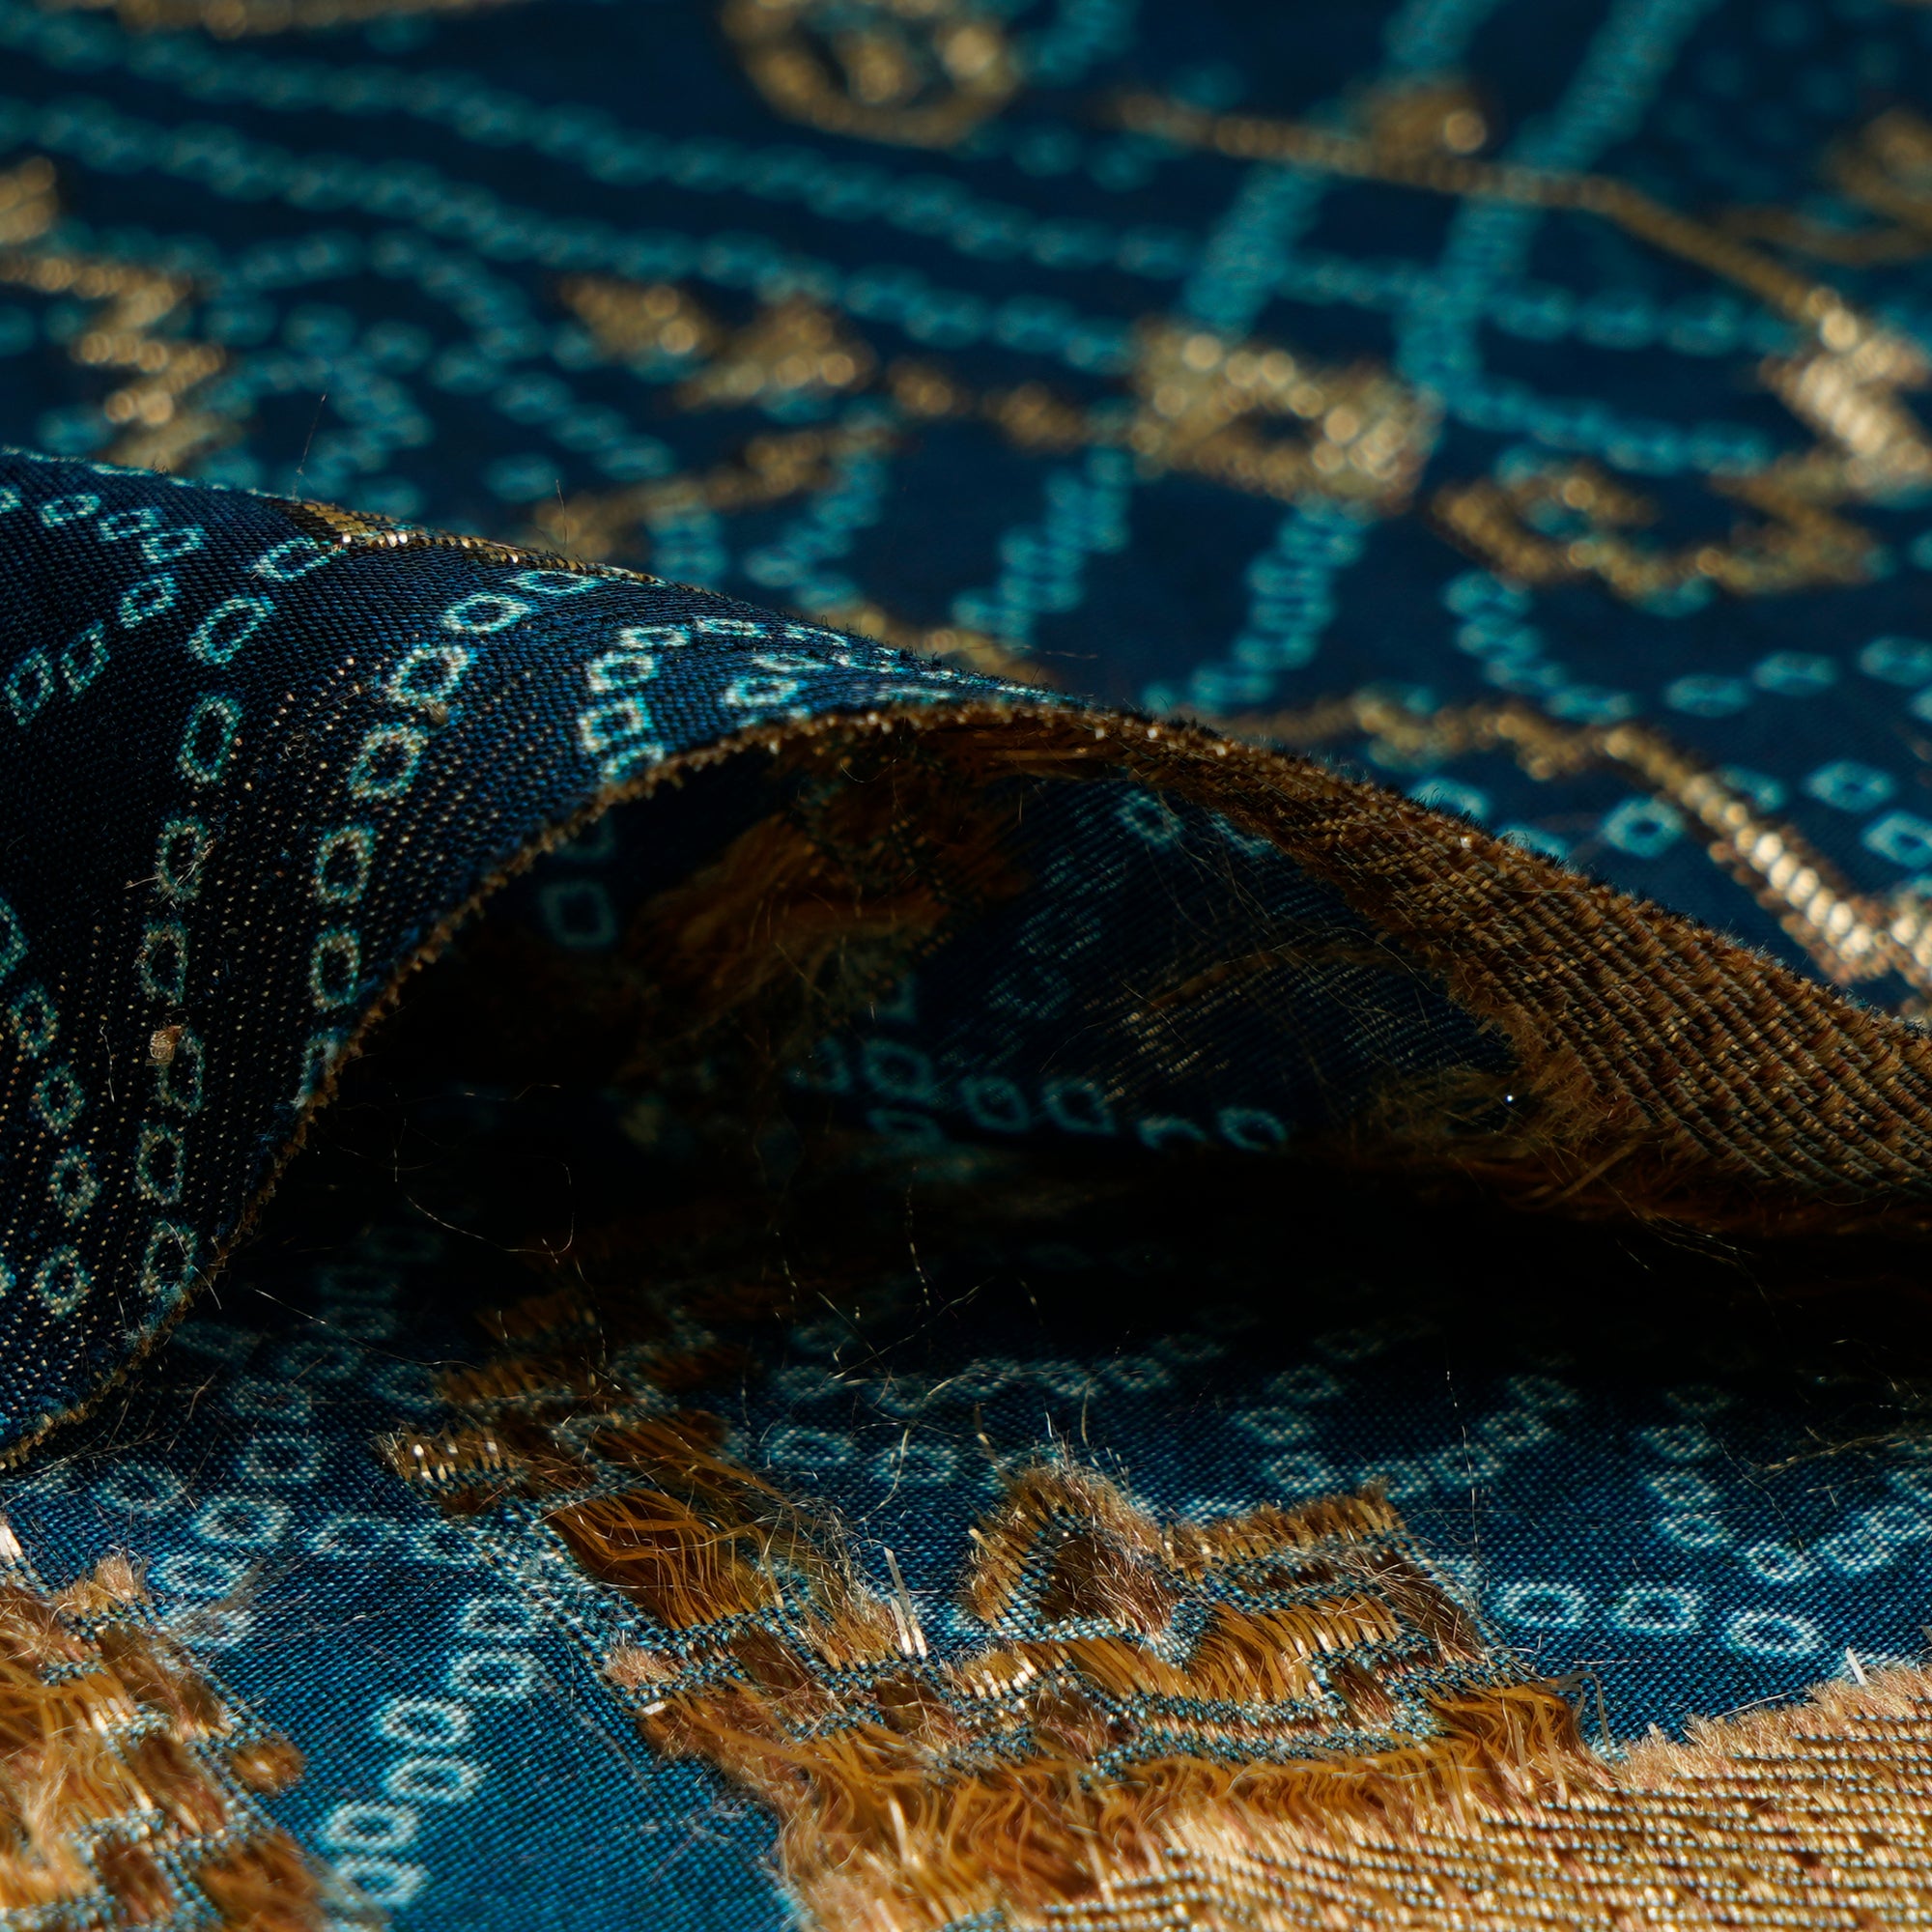 Multi Color Traditional Pattern Printed Fancy Banarasi Viscose Jacquard Fabric